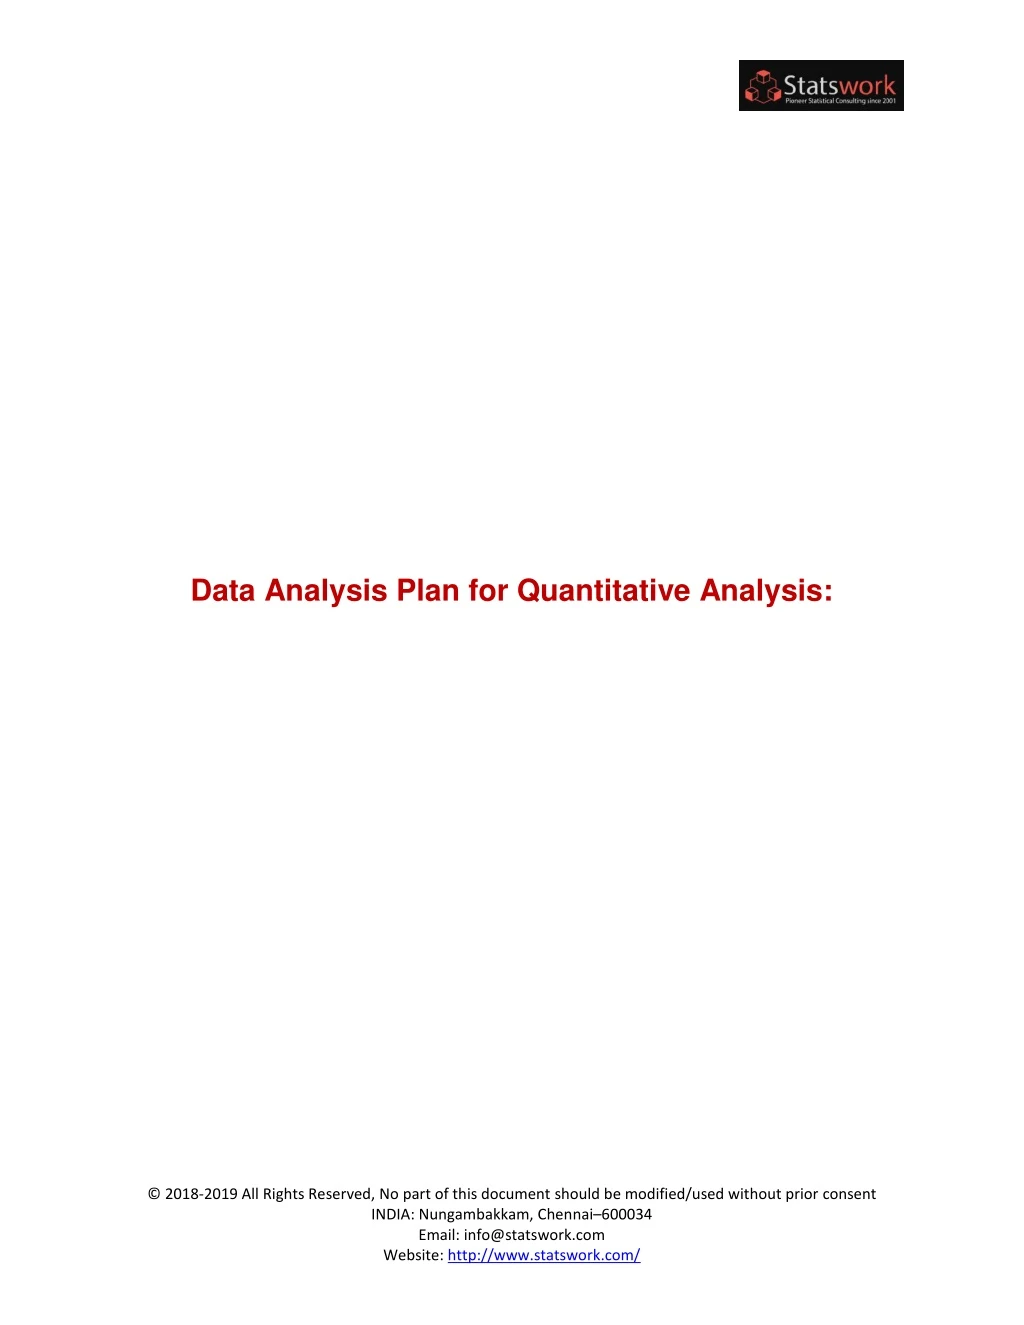 data analysis plan for quantitative analysis